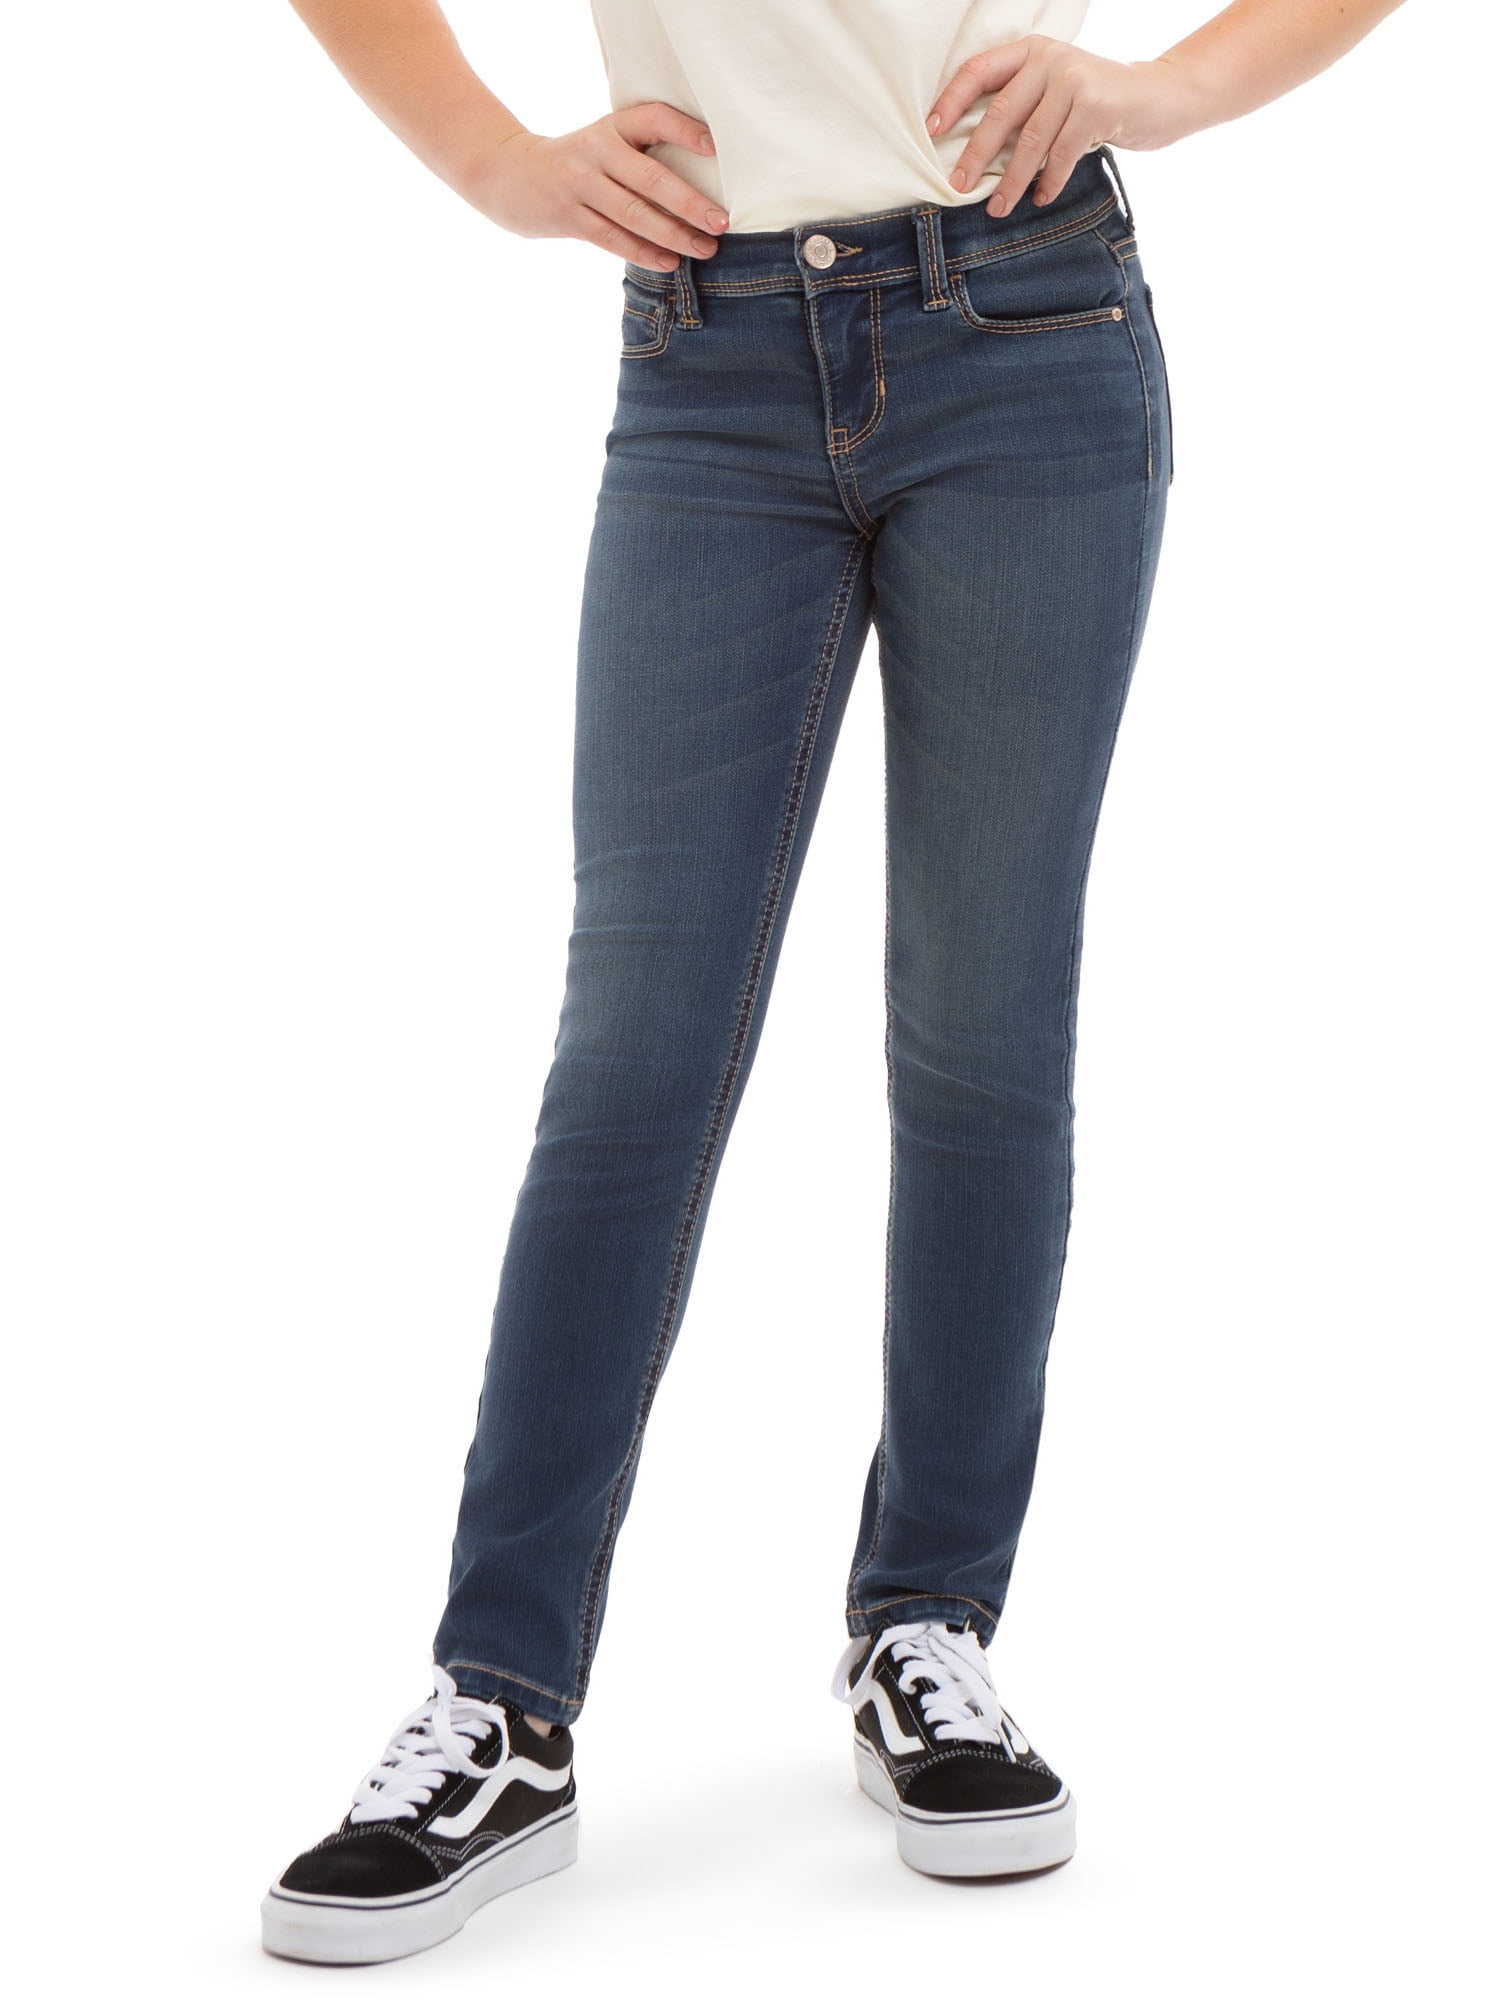 Jordache Girls Skinny Jeans, Sizes 5-18 